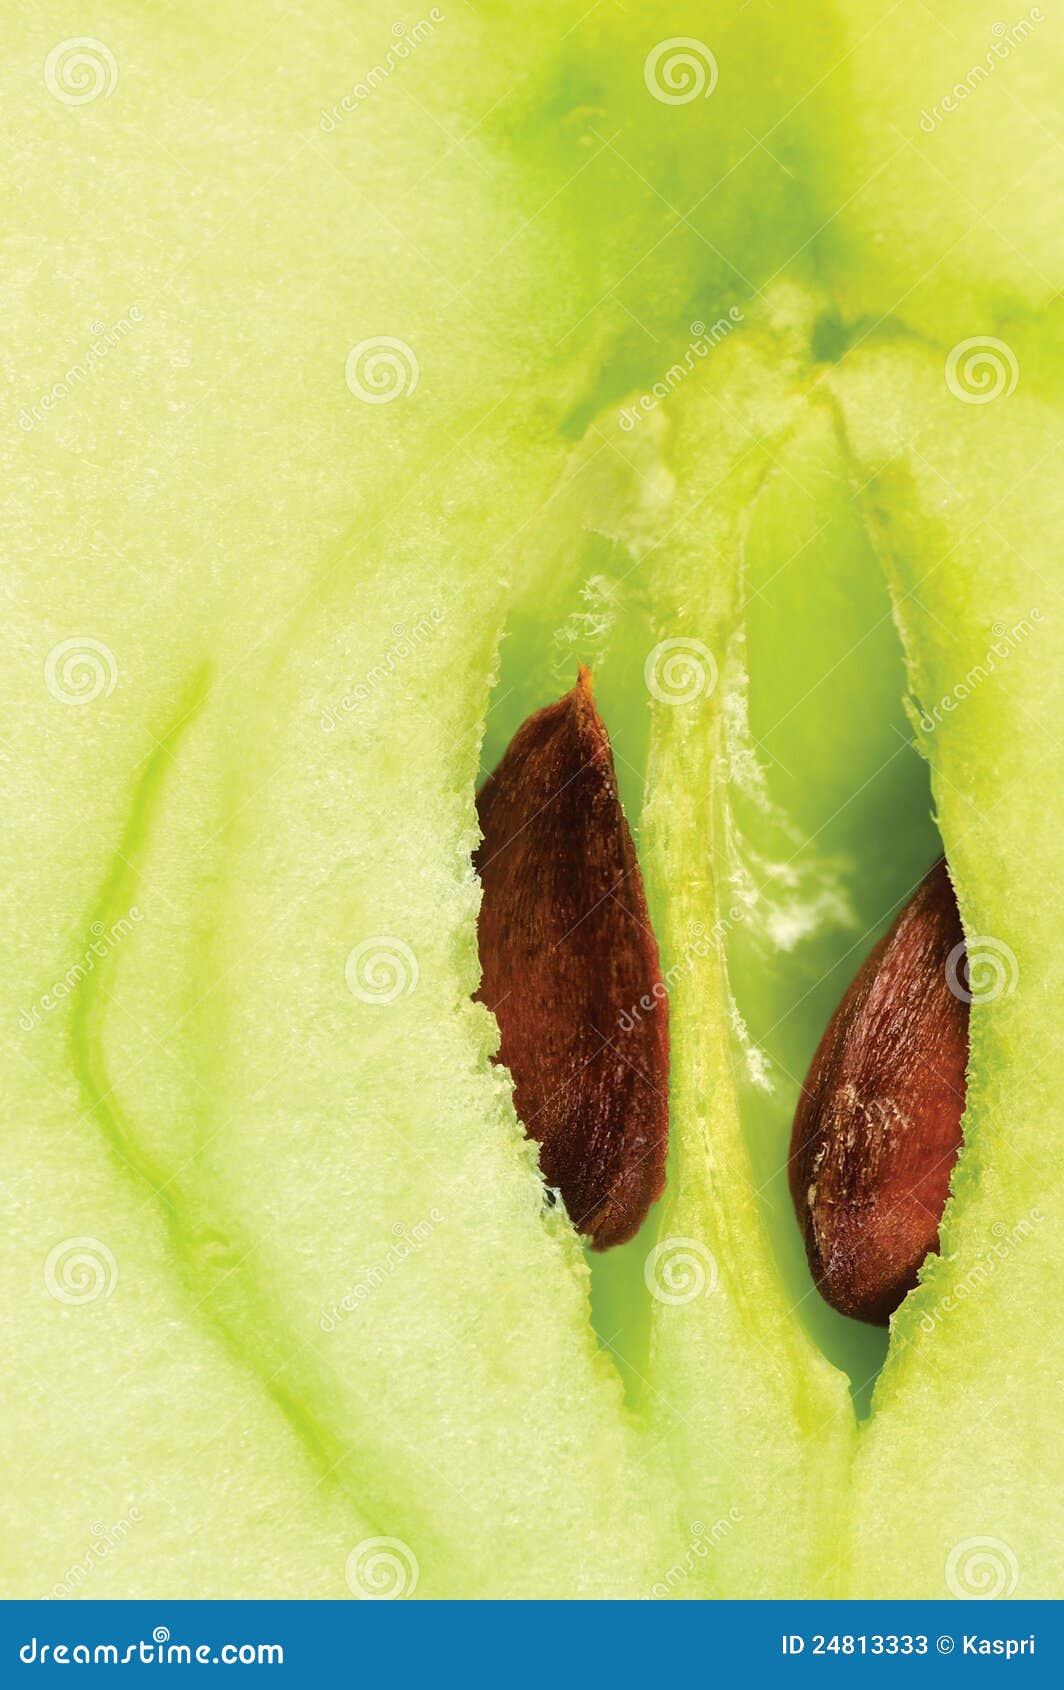 apple half cut green core seeds macro closeup